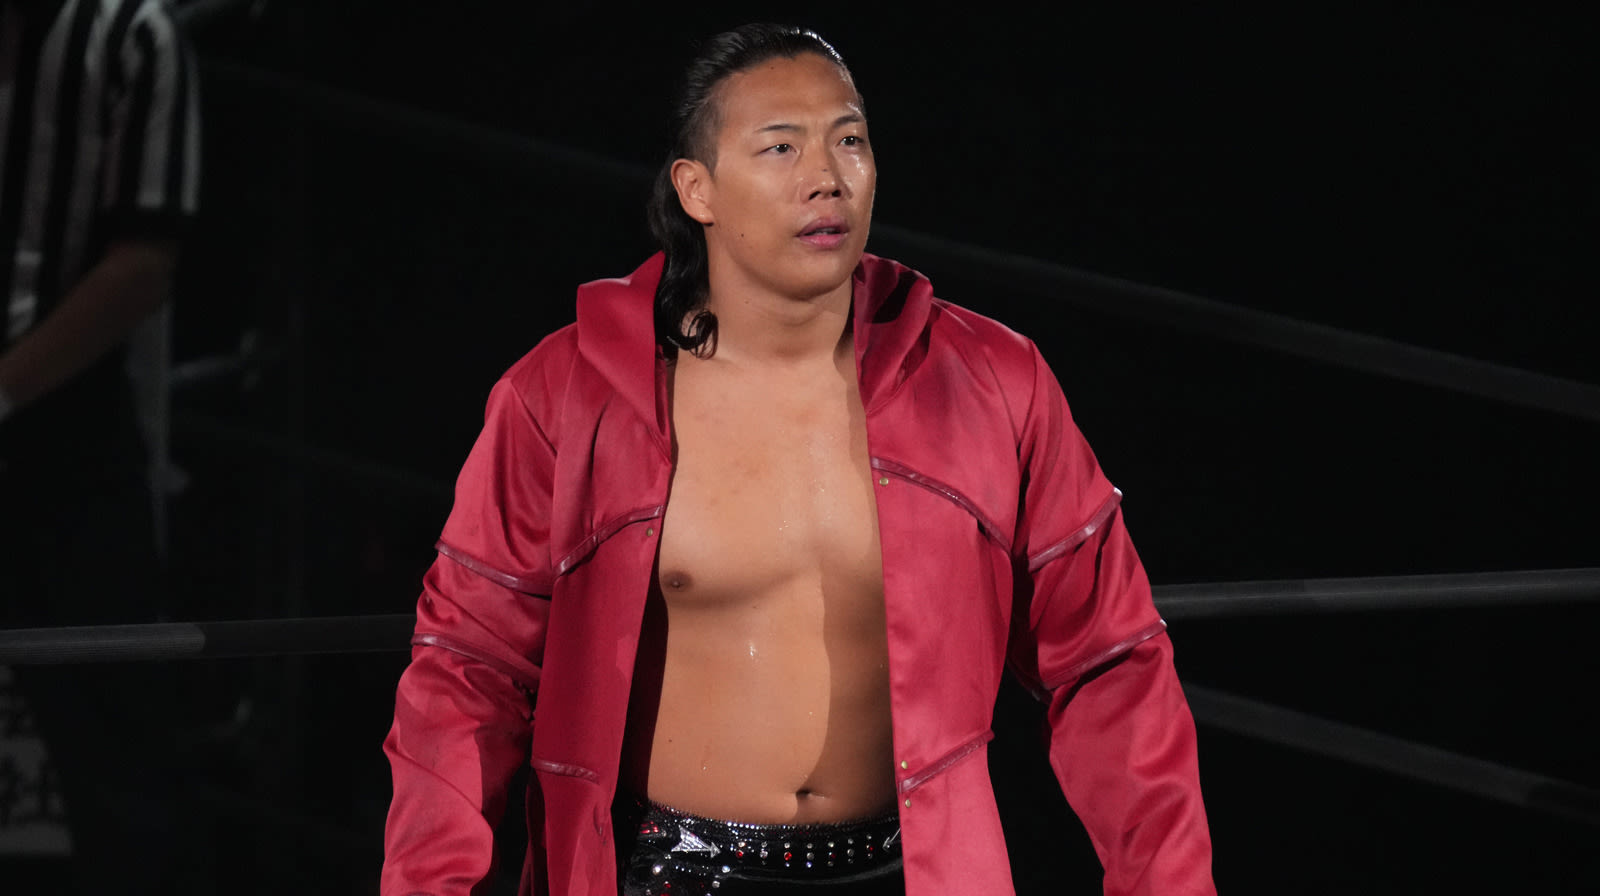 Konosuke Takeshita On Working In AEW: 'I've Already Thrown Away The Joys Of Wrestling' - Wrestling Inc.